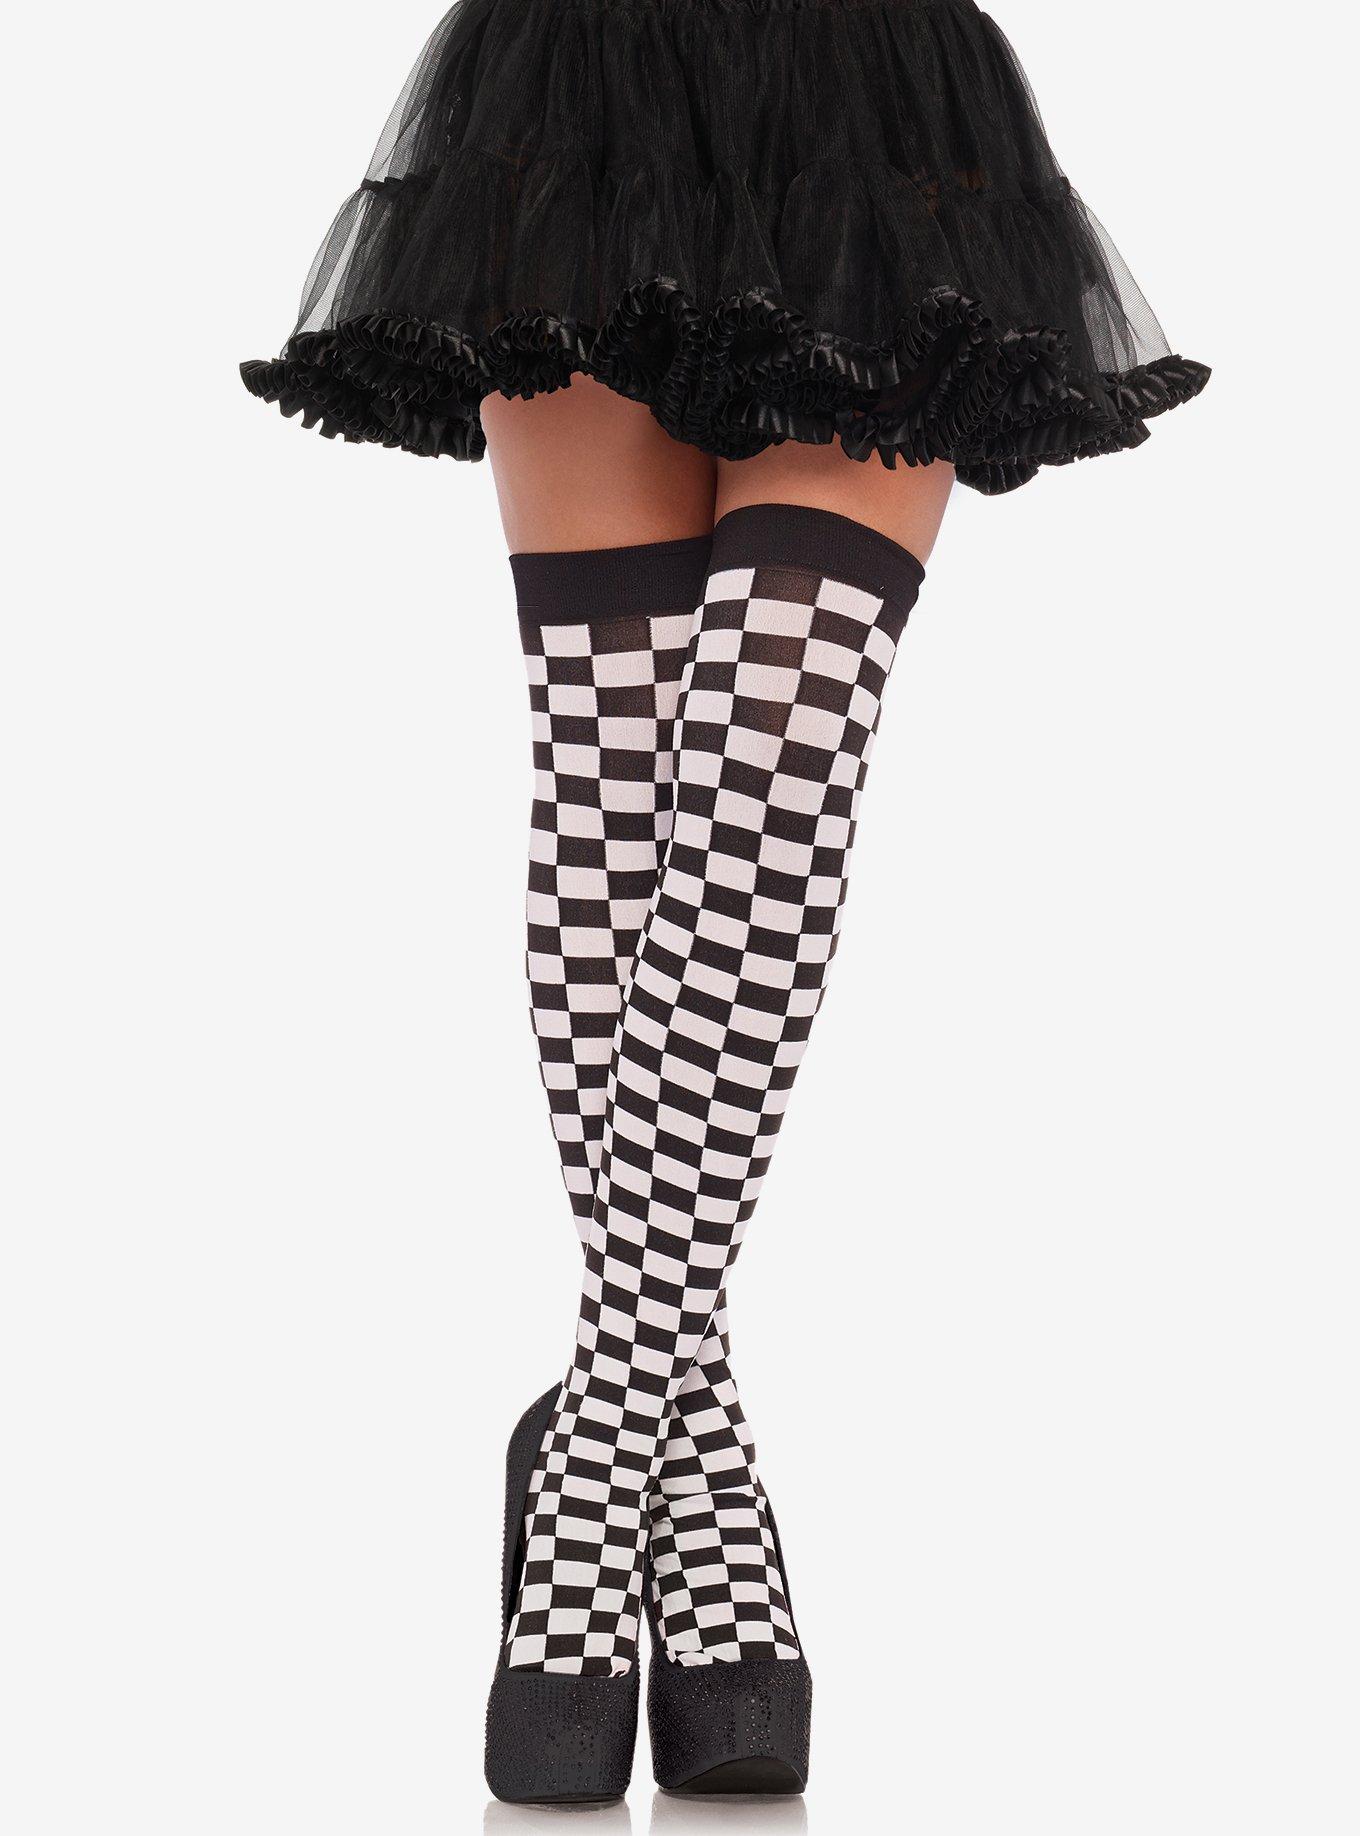 Checkered Stockings Black/White, , hi-res